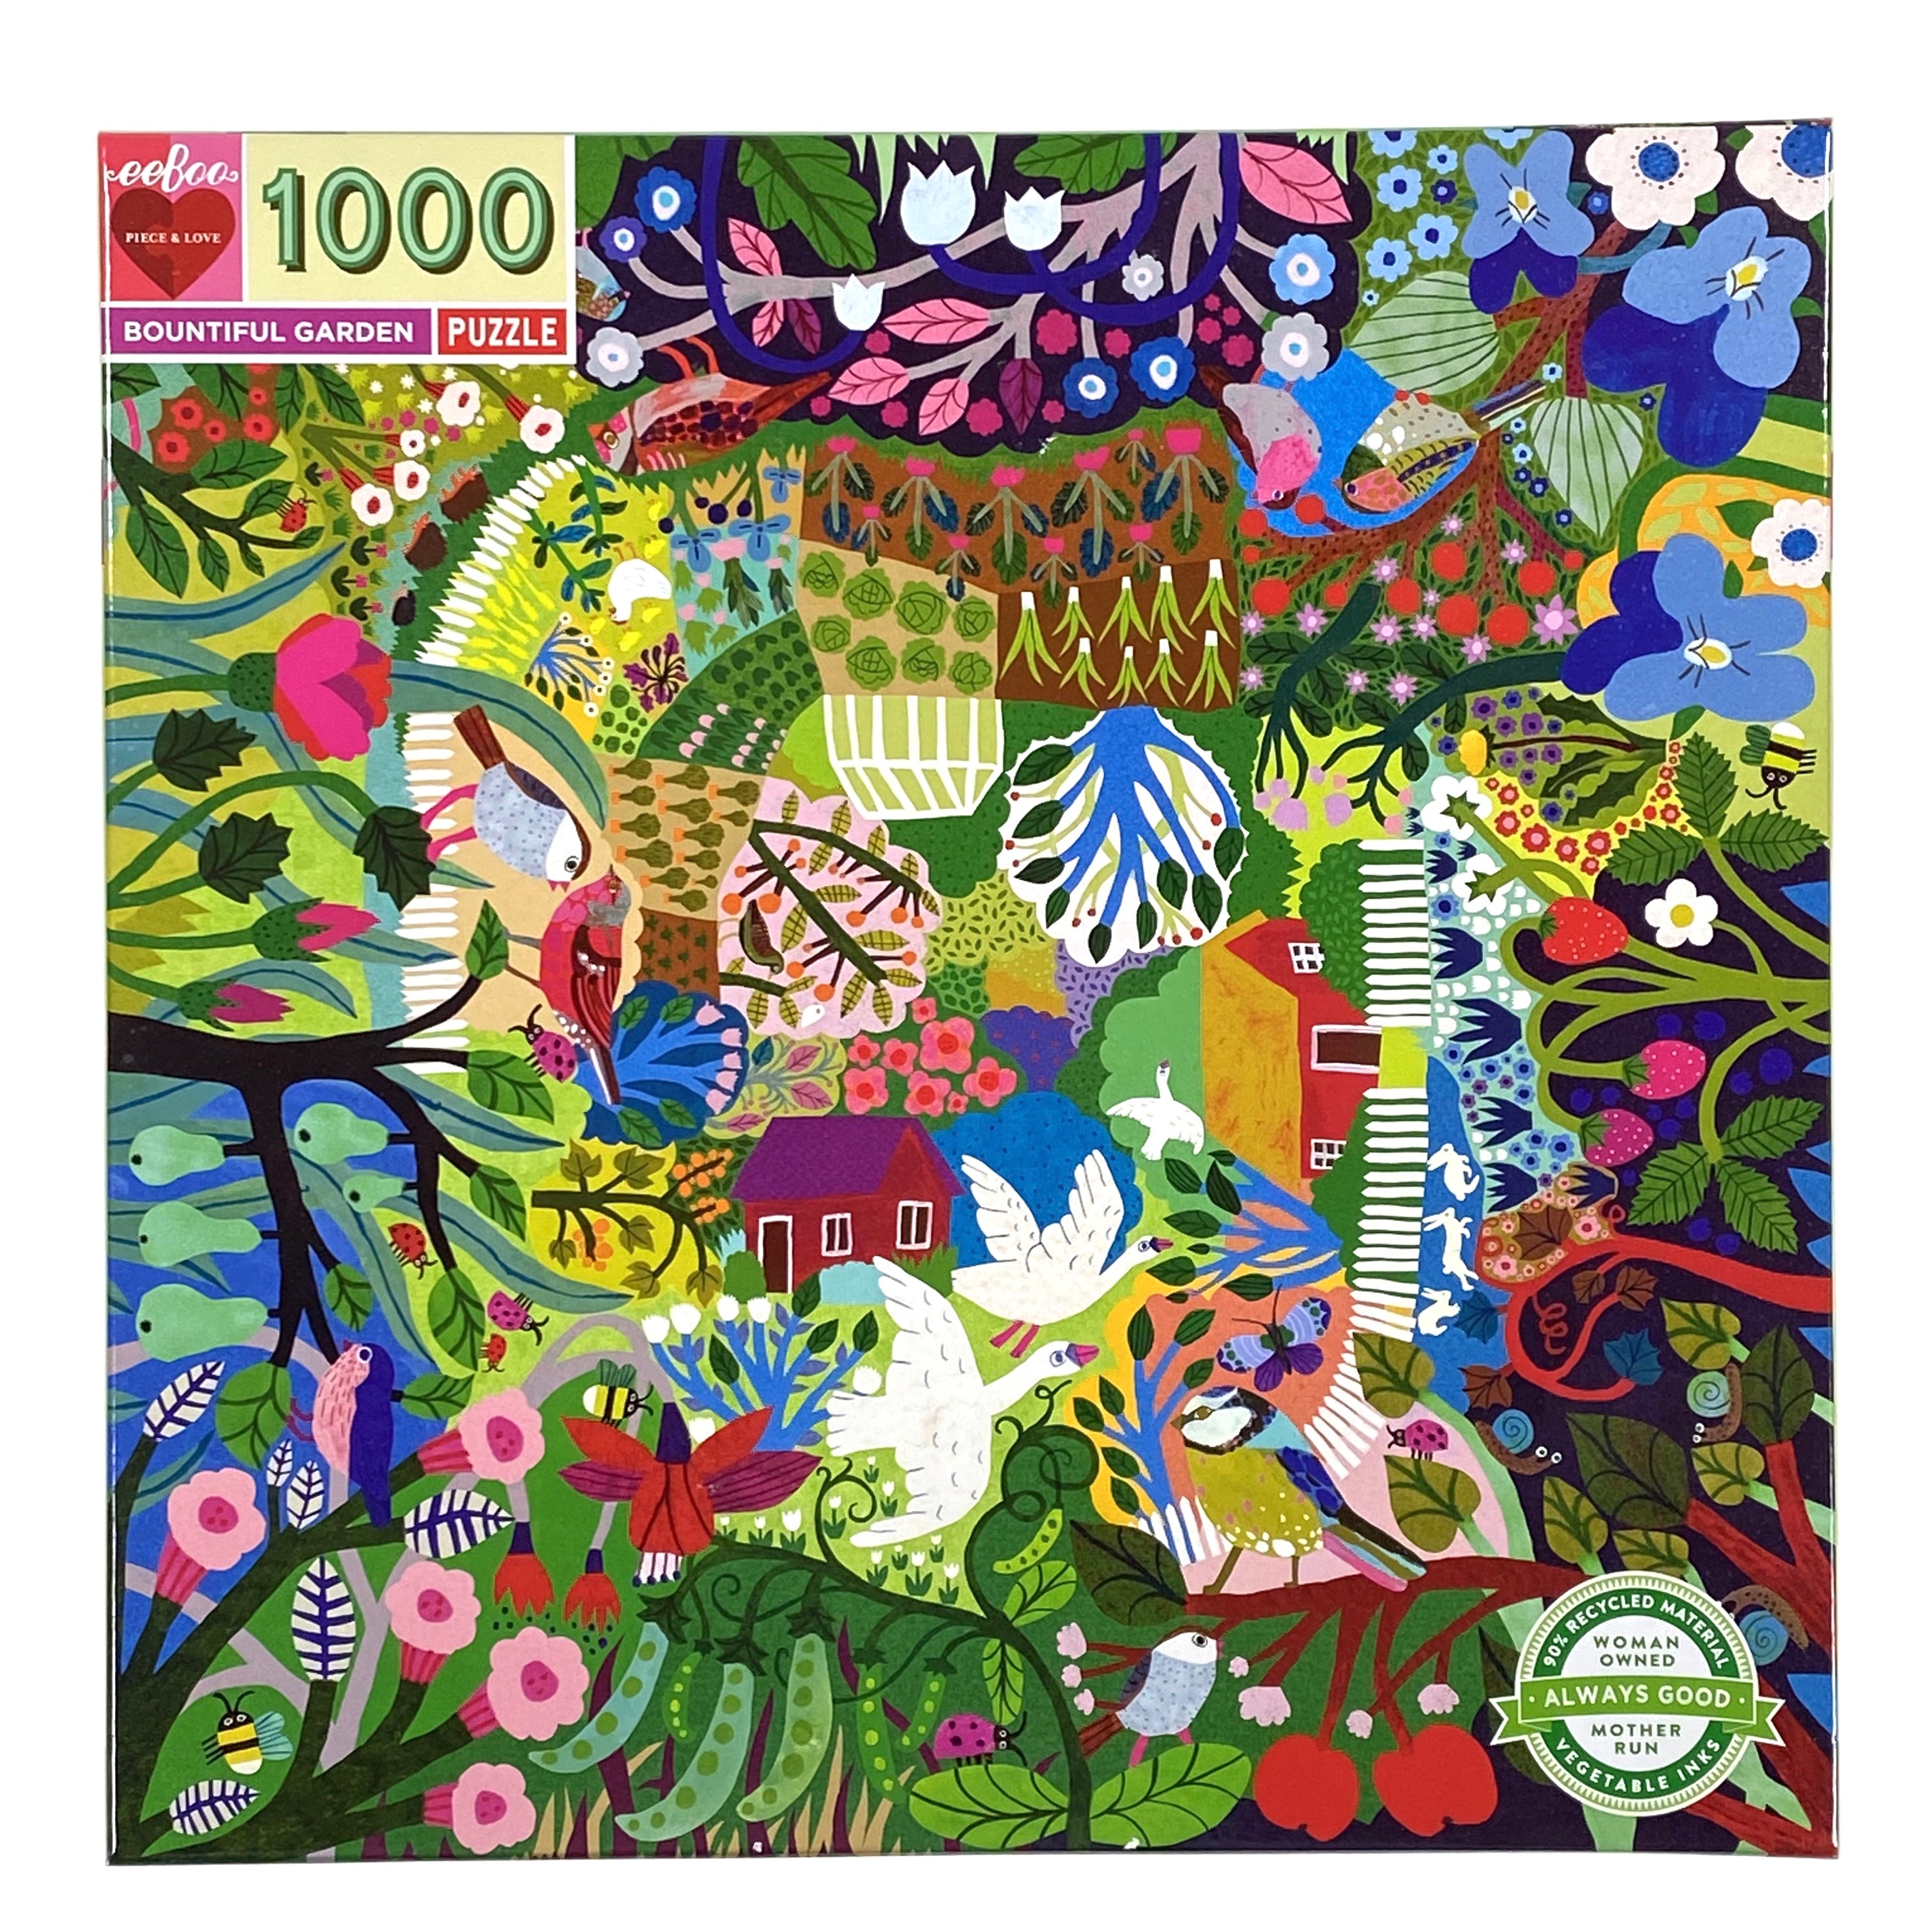 Bountiful Garden 1000 Piece Puzzle    